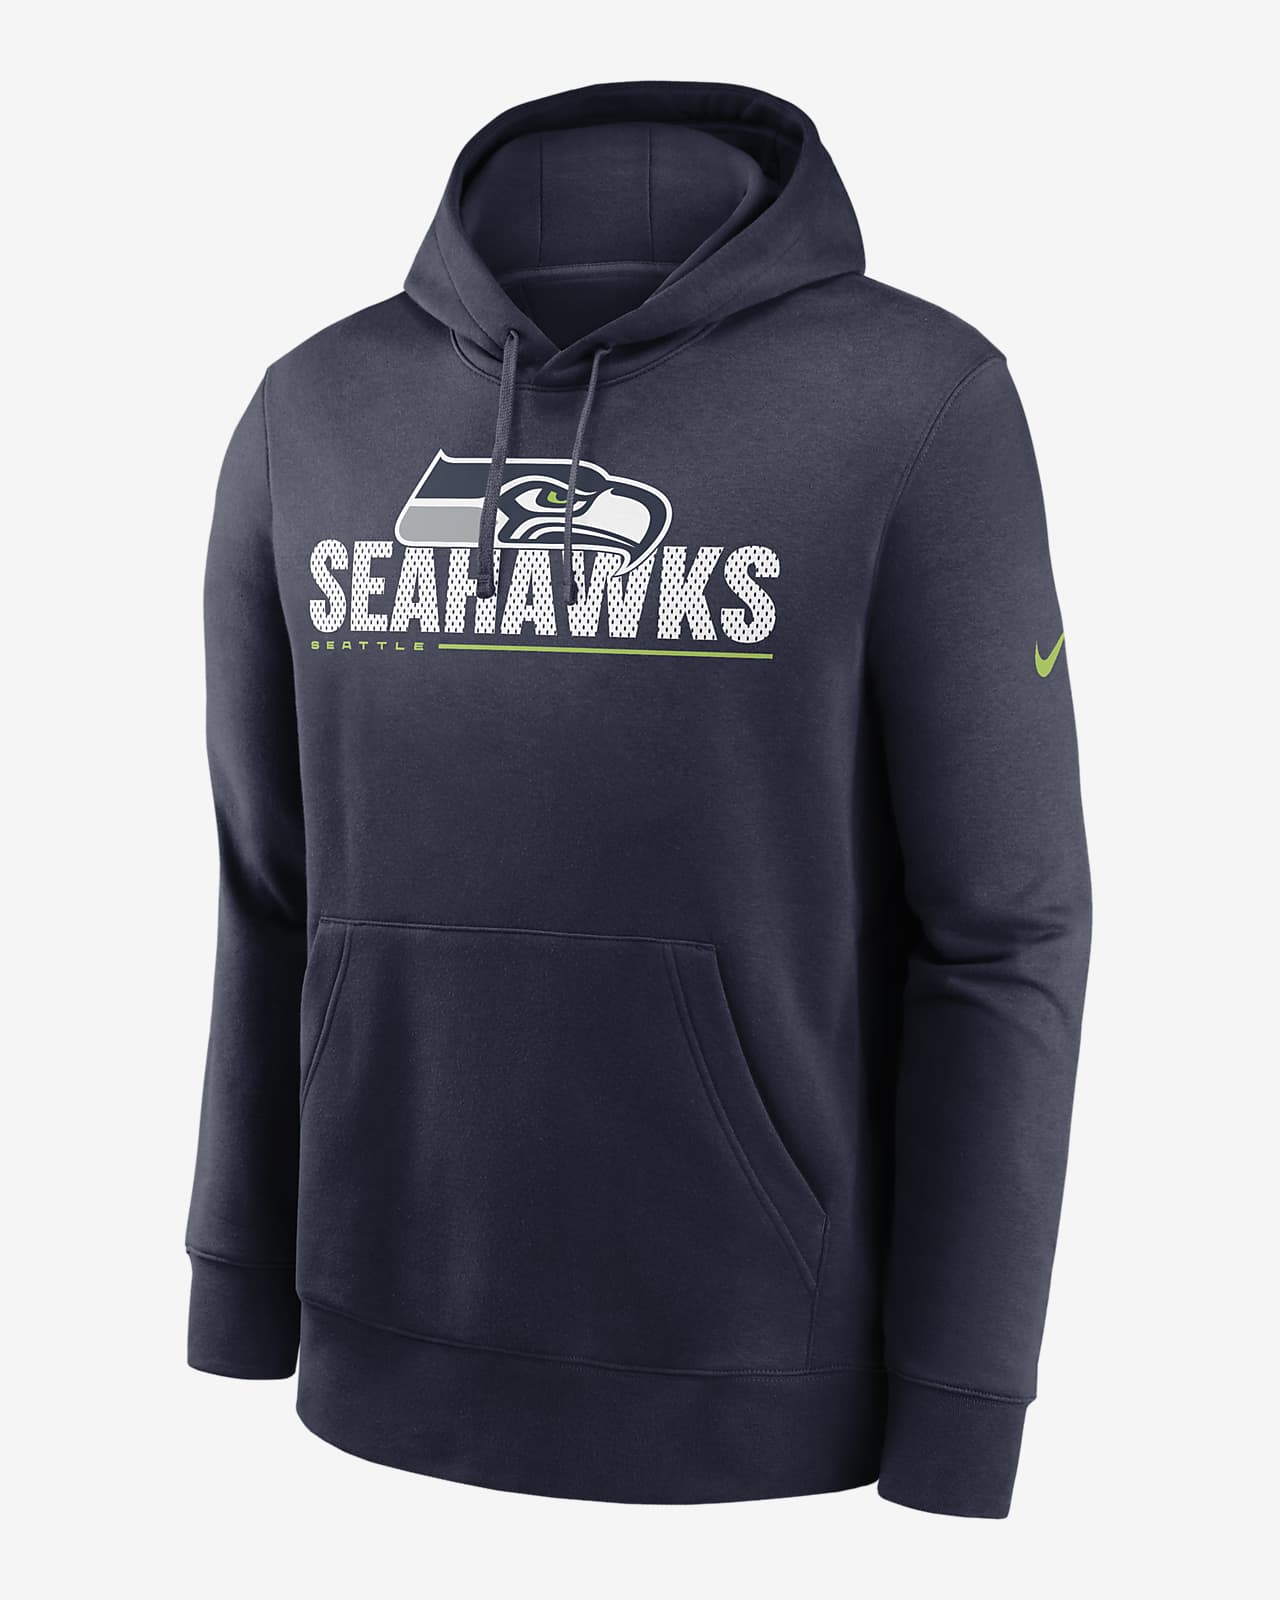 seahawks zip sweatshirt